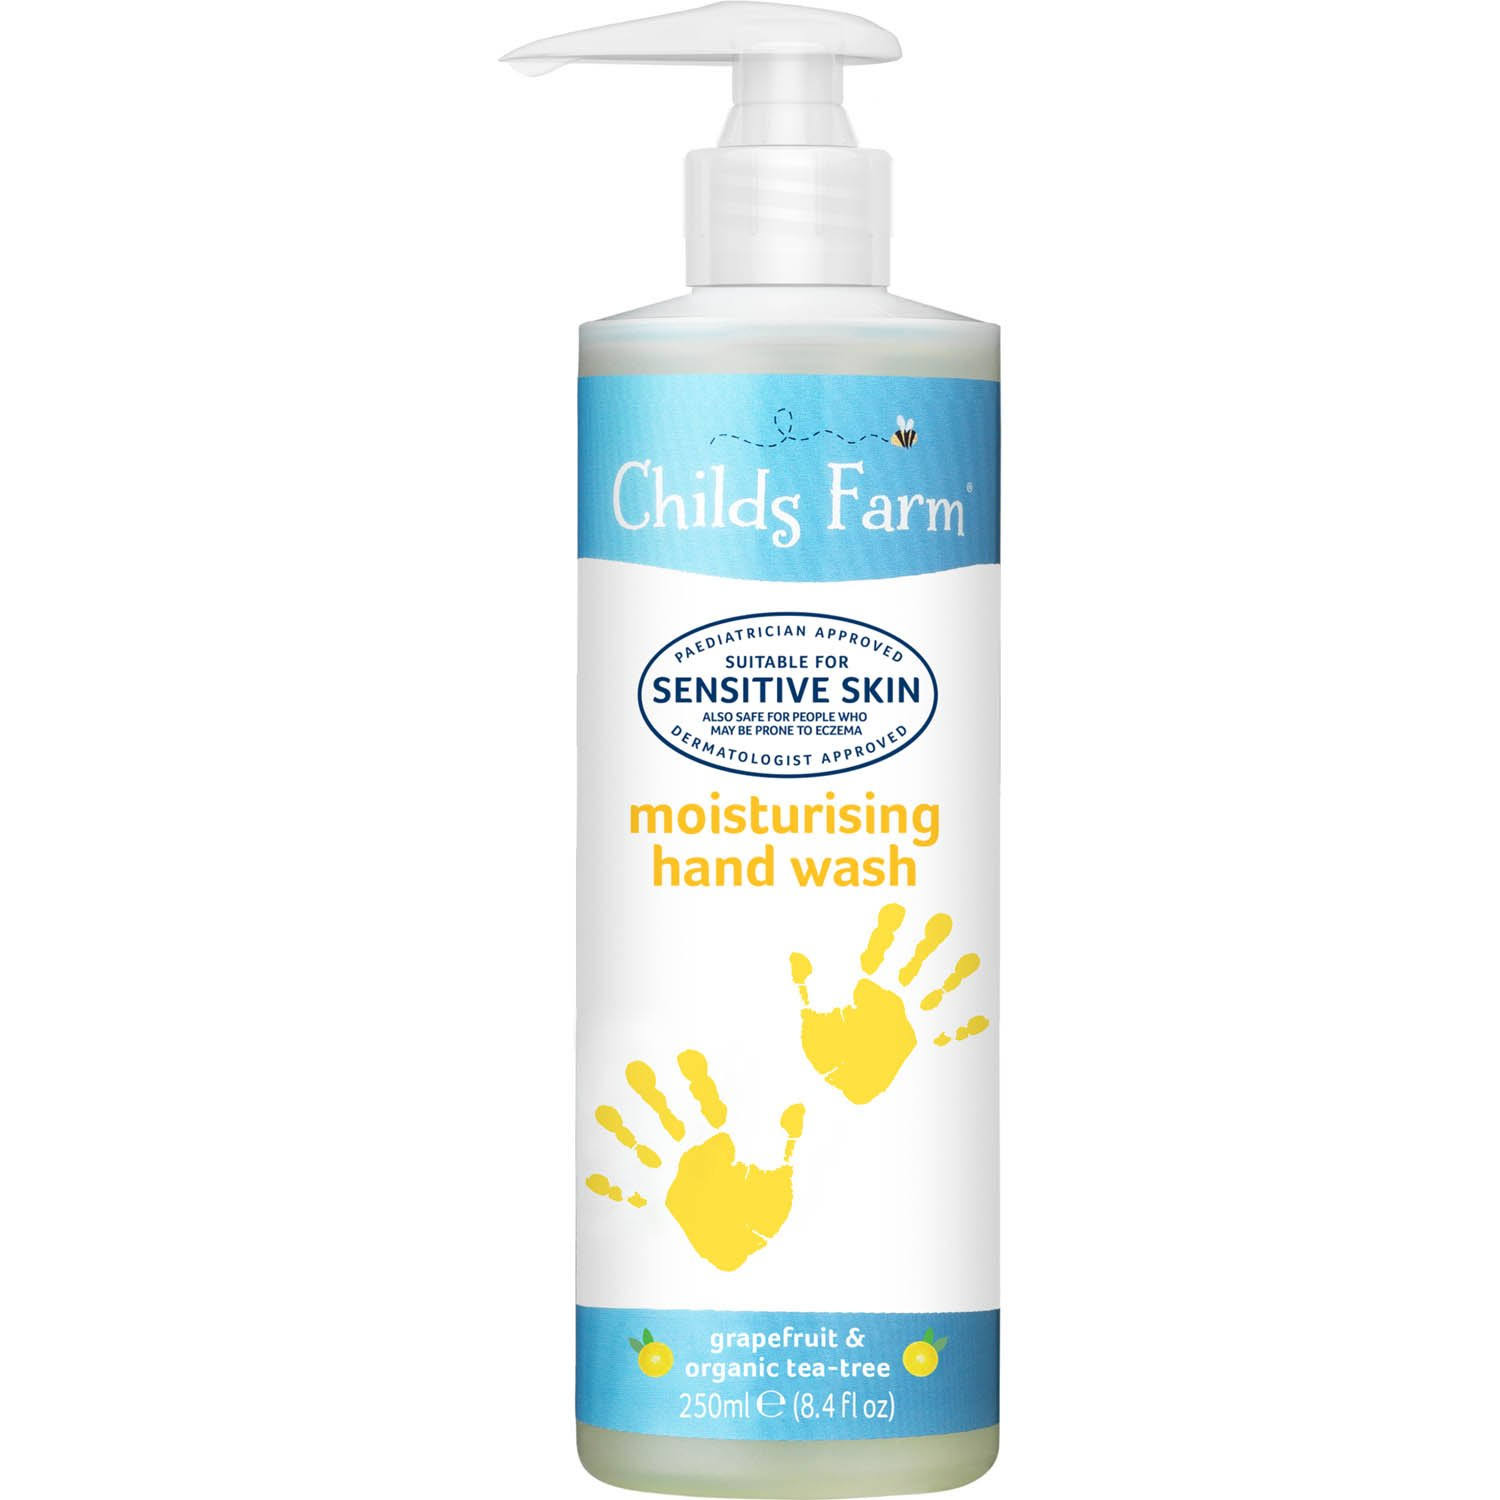 Childs Farm Hand Wash - Grapefruit and Tea Tree Oil, 250ml